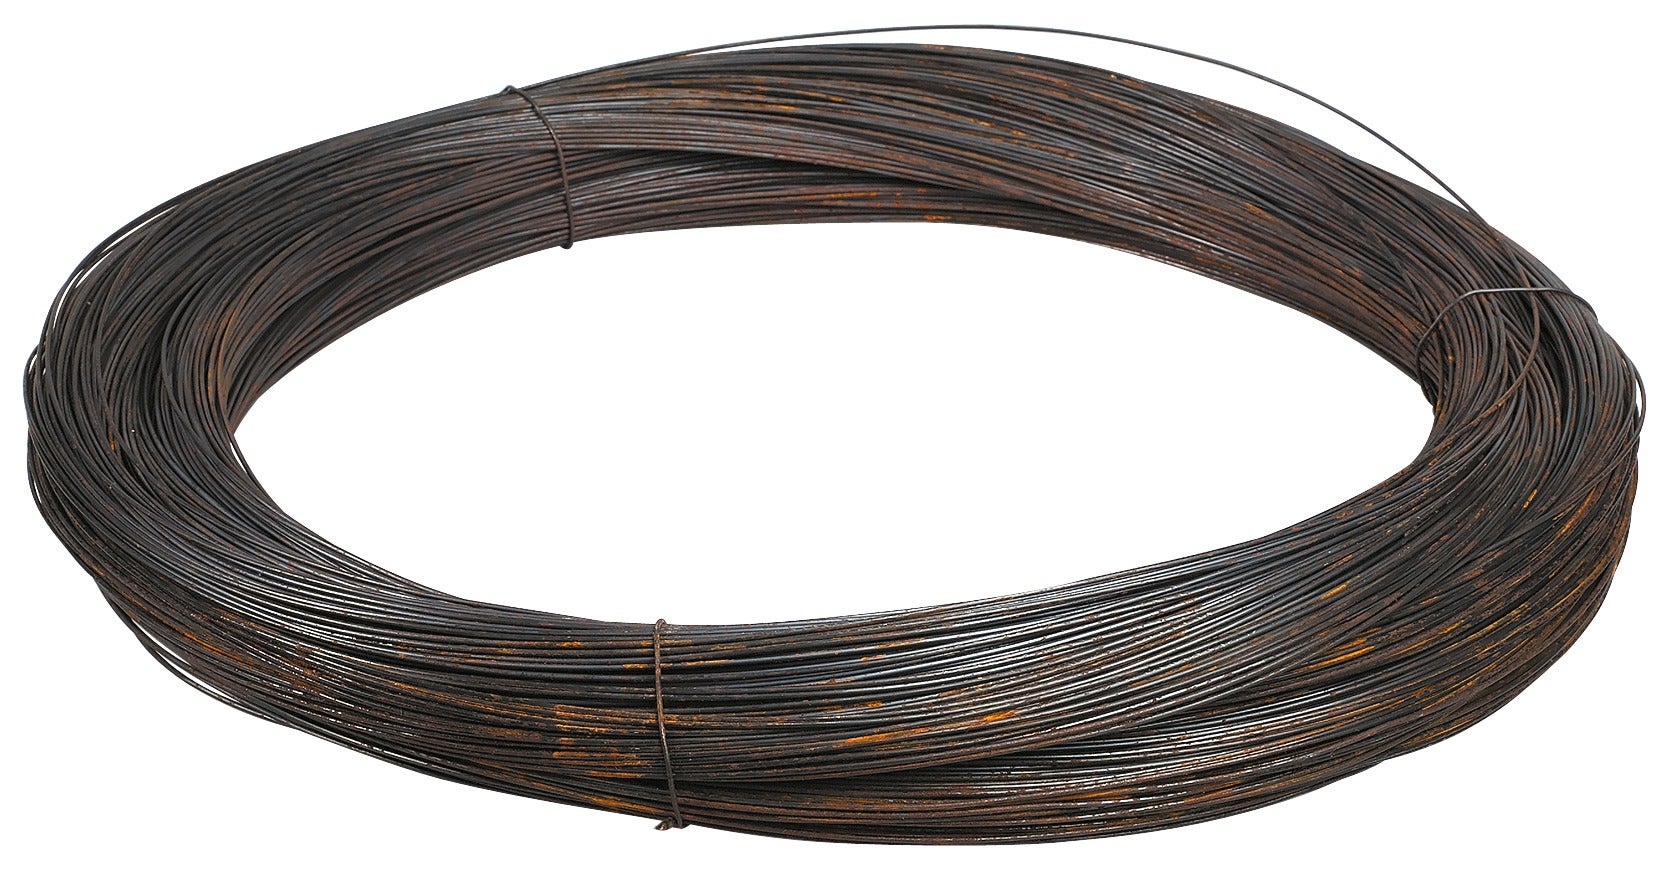 Fil de fer recuit 0.8 mm ga 20 / 20 ou 40 mètres. Fil de fer recuit noir,  Fil de fer décoration, fil de fer bijoux -  France